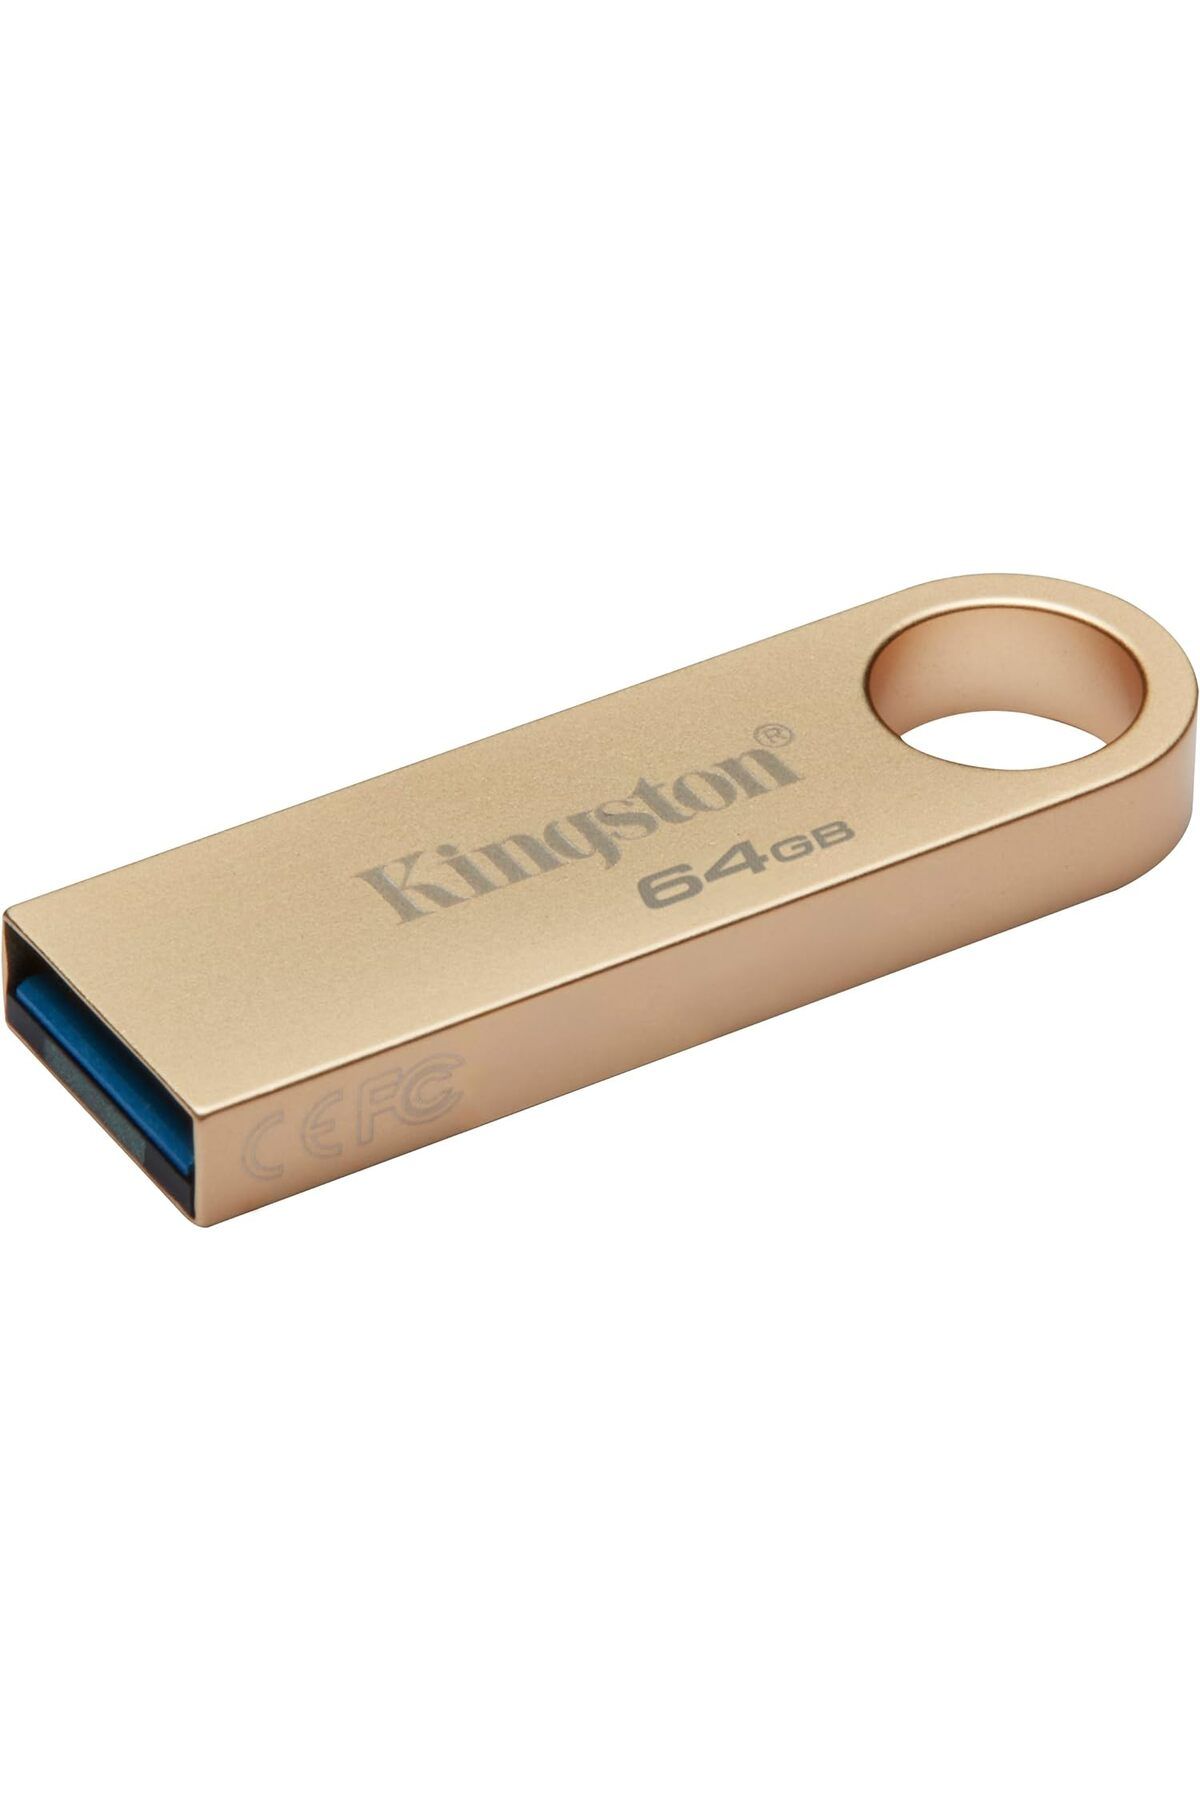 Kingston 64GB DataTraveler USB Bellek